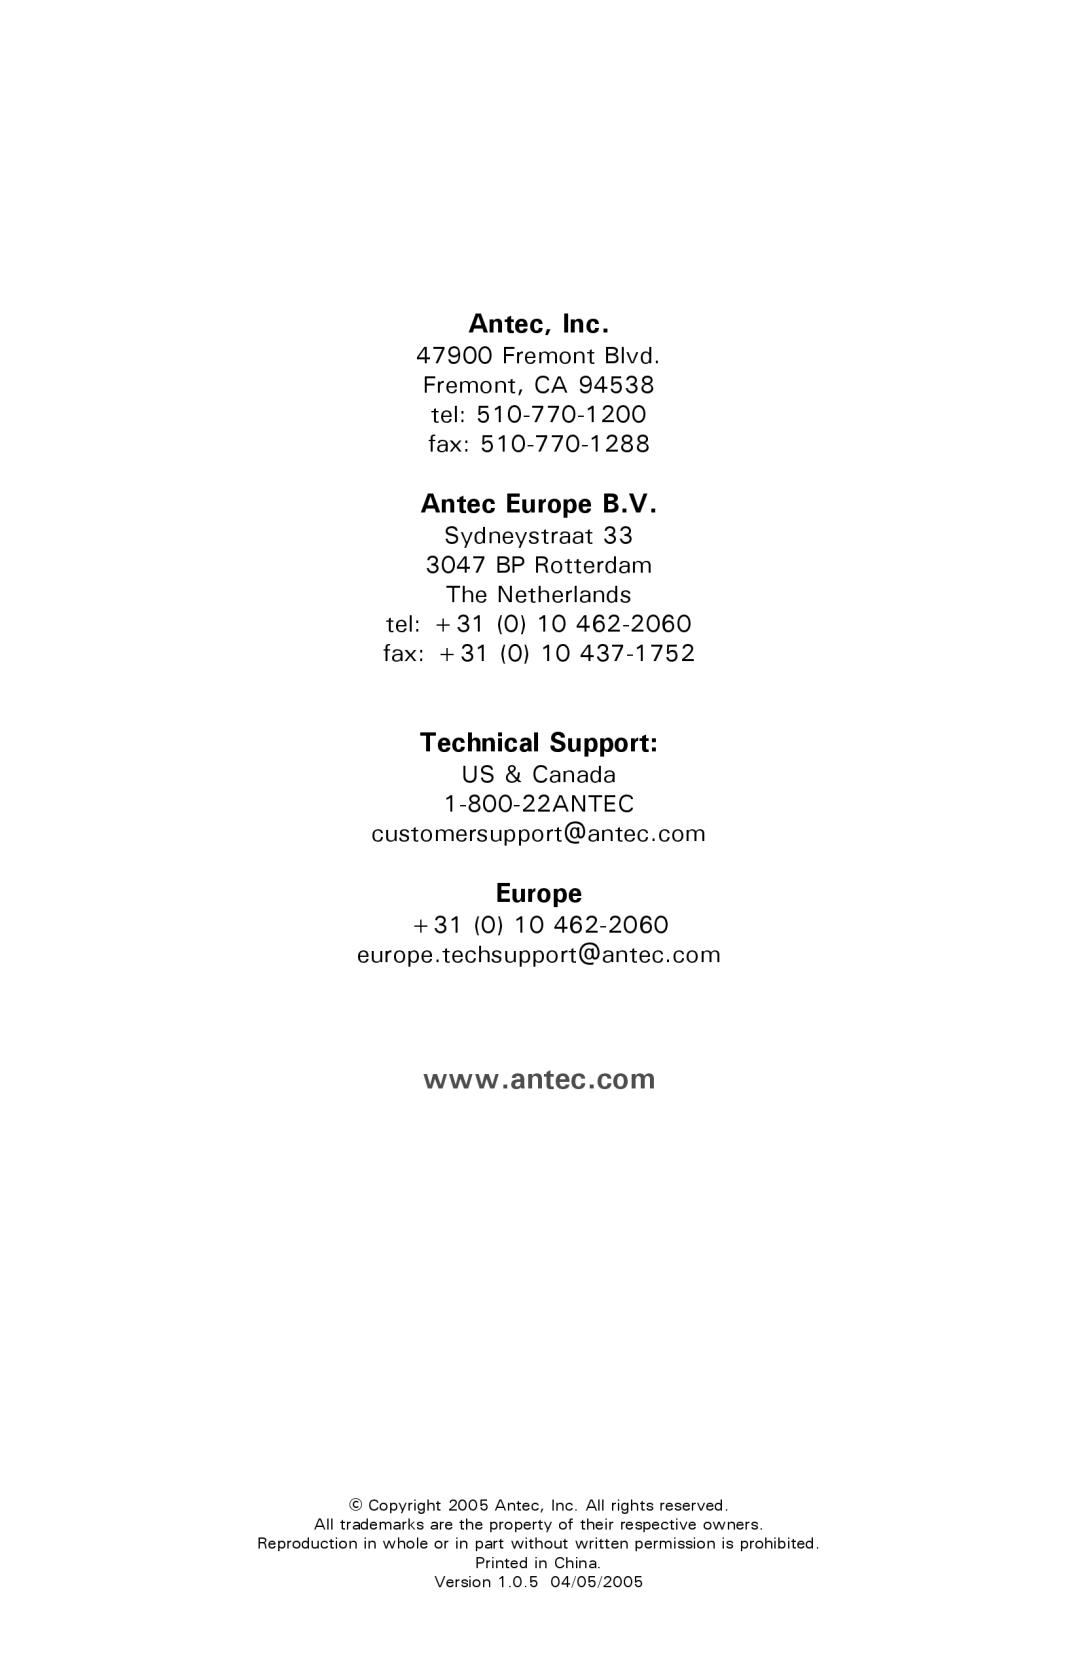 Antec SLK3800B user manual Antec, Inc, Antec Europe B.V, Technical Support, Fremont Blvd Fremont, CA tel fax, fax +31 0 10 